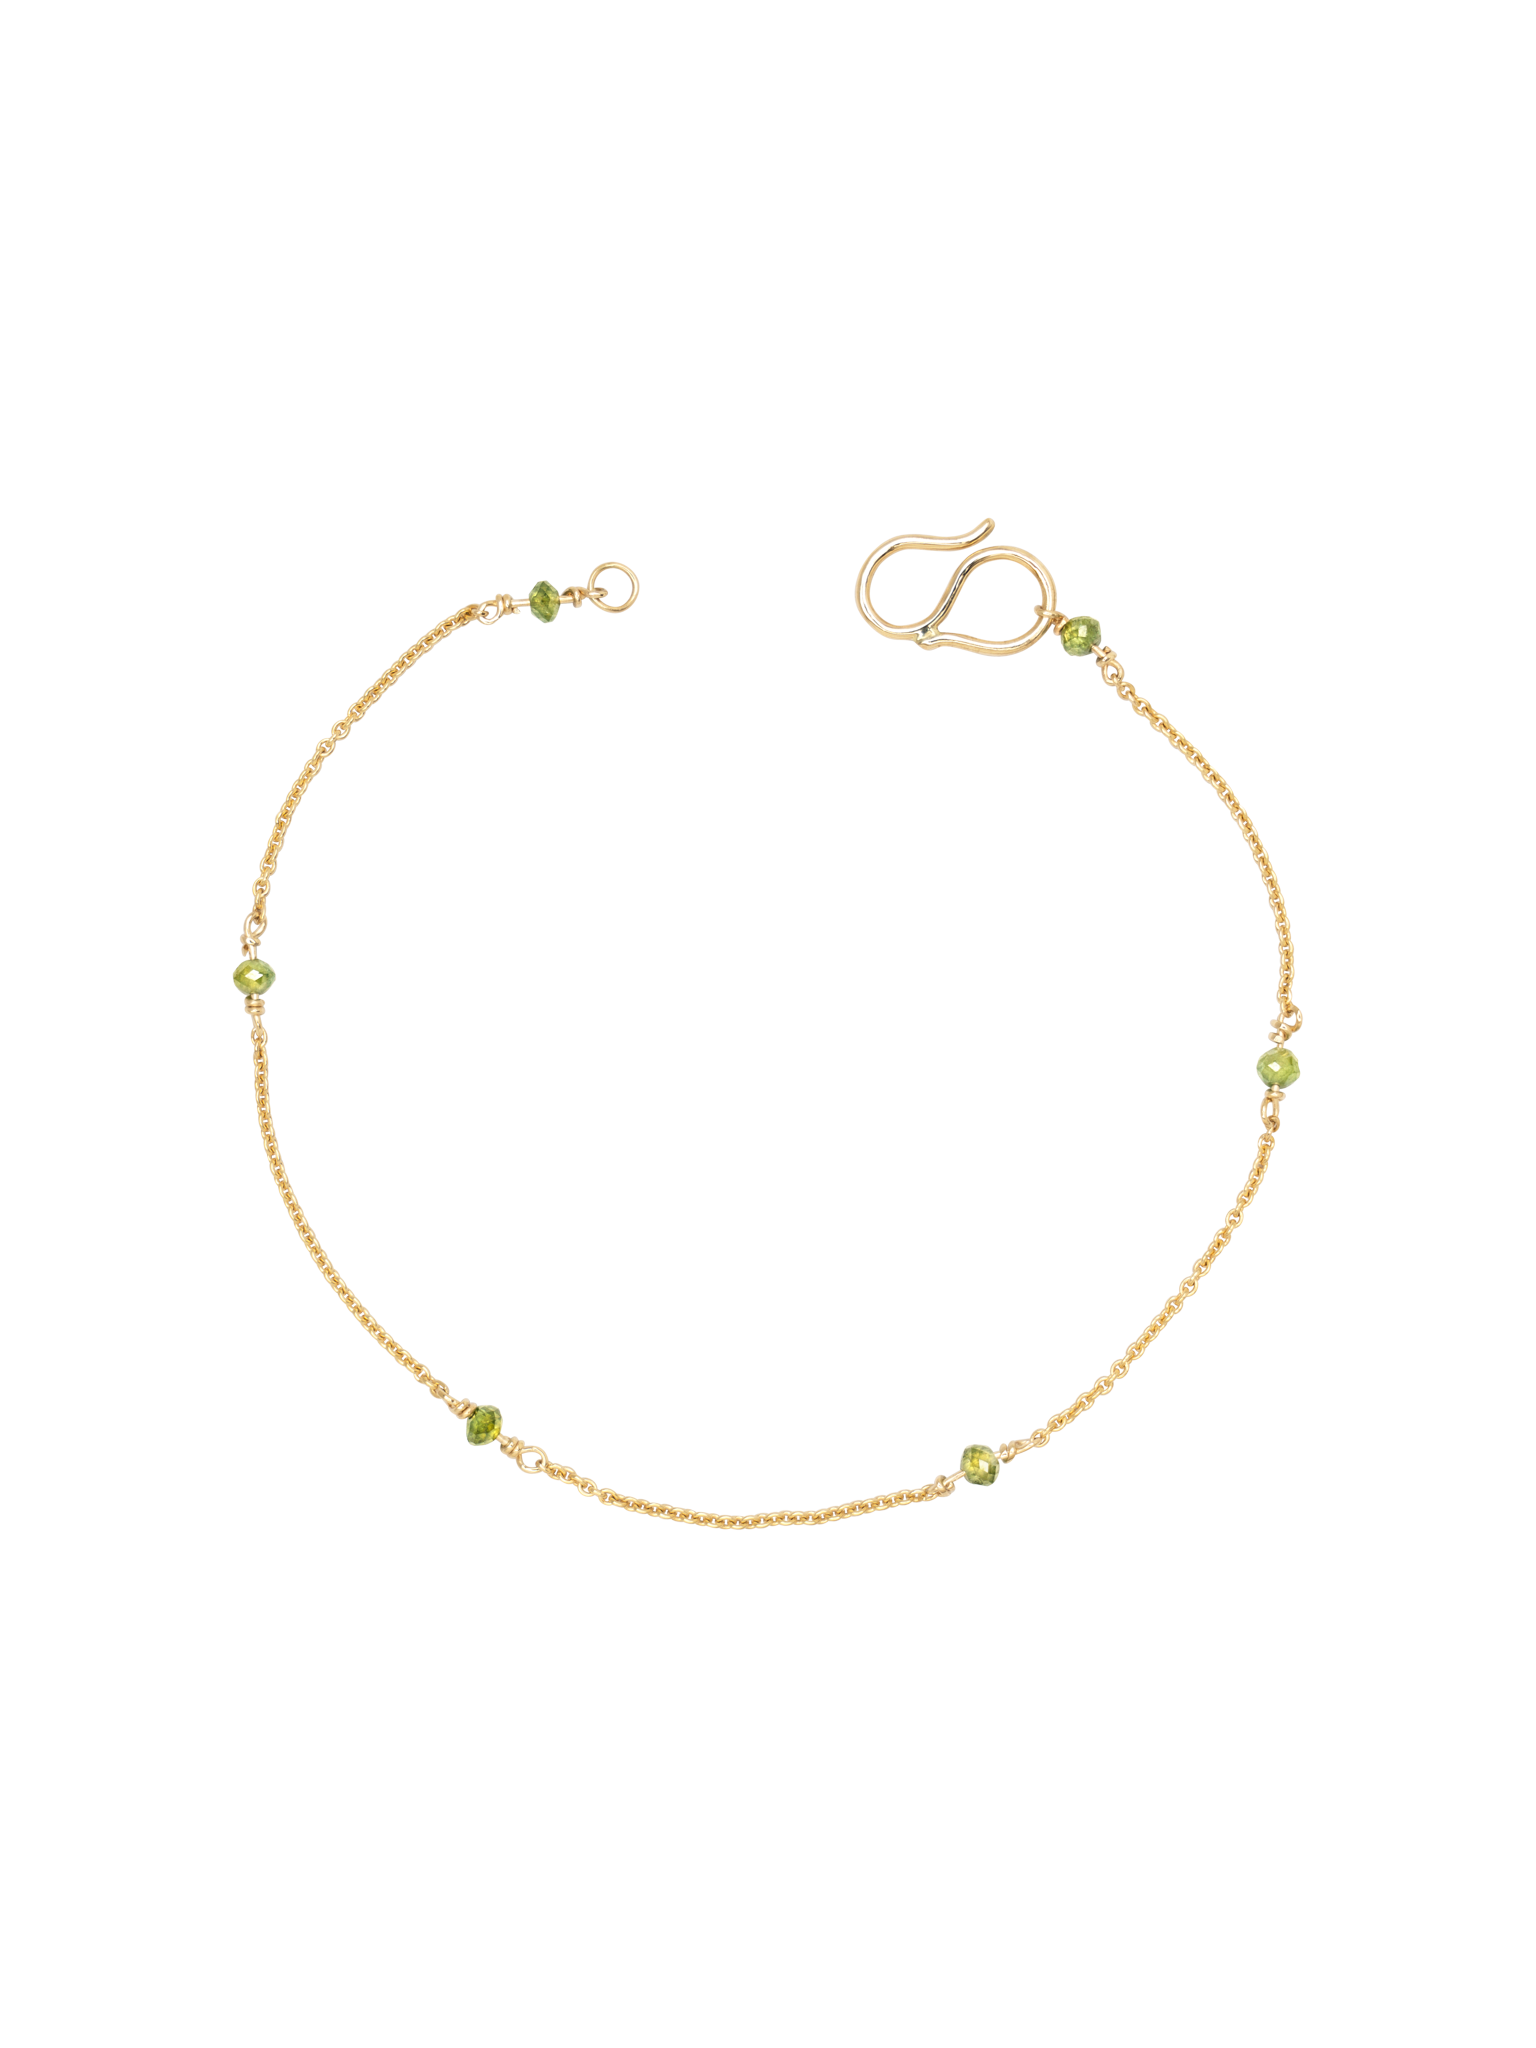 Chain bracelet with diamond beads